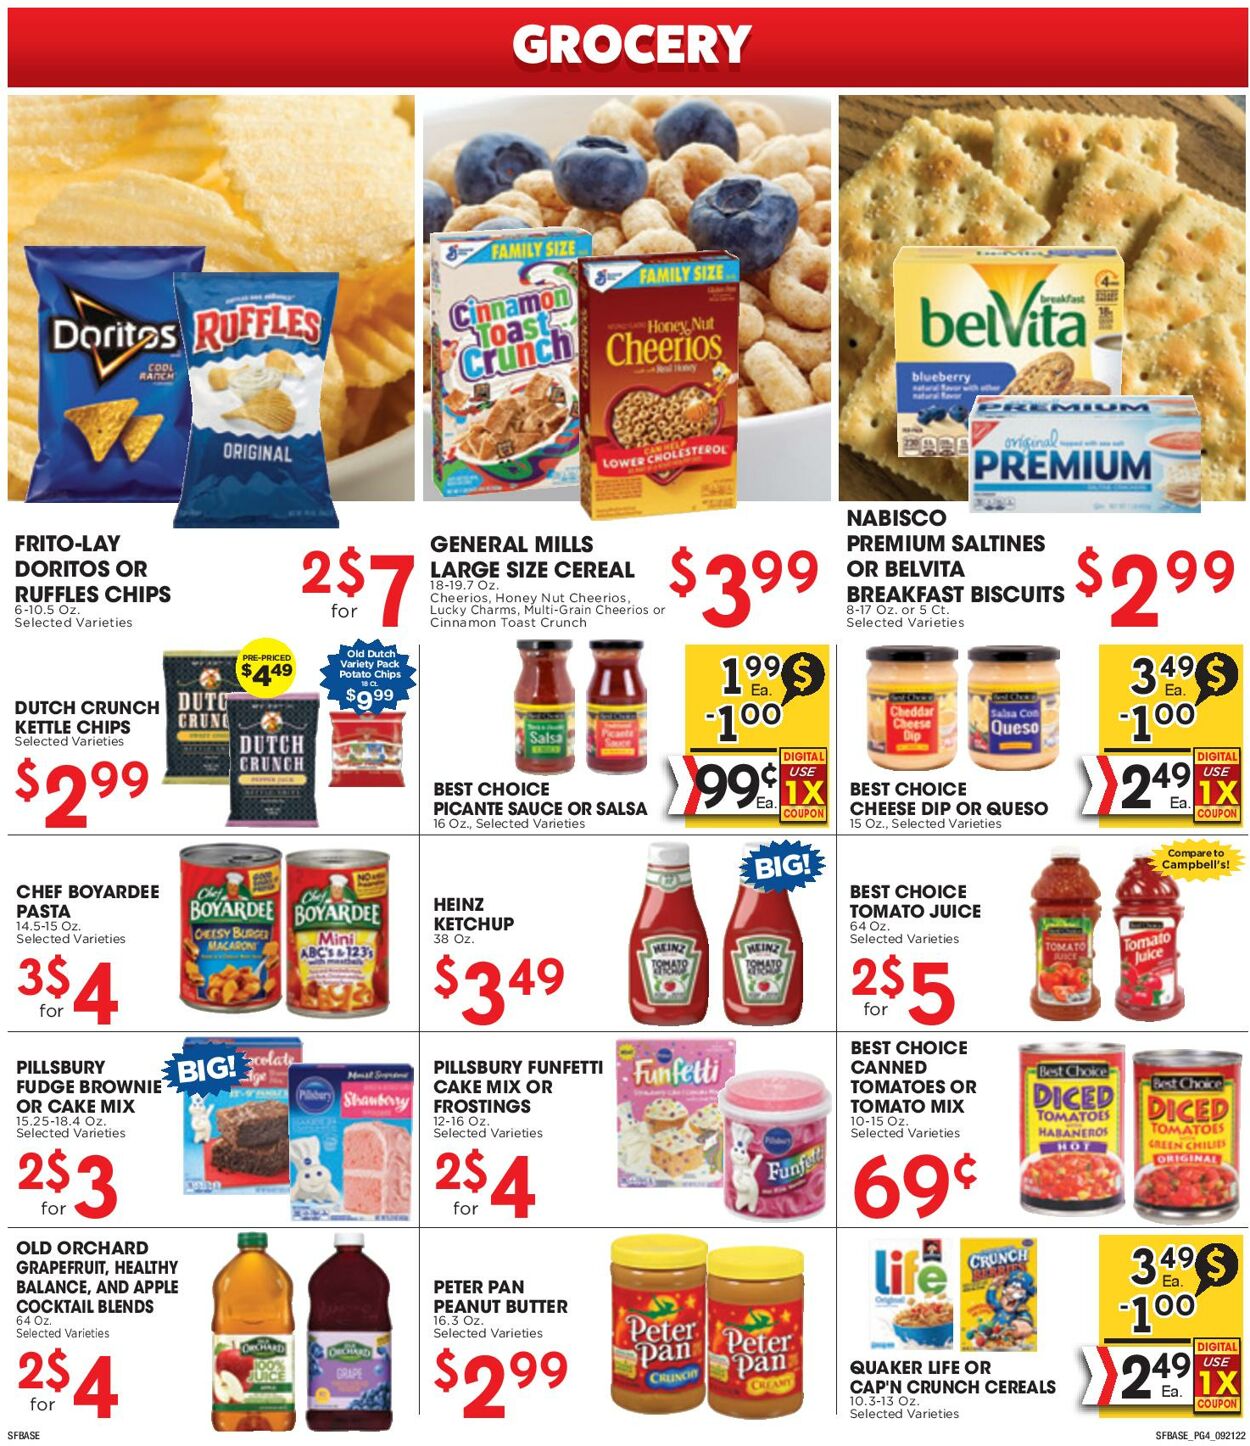 Weekly ad Sunshine Foods 09/21/2022 - 09/27/2022